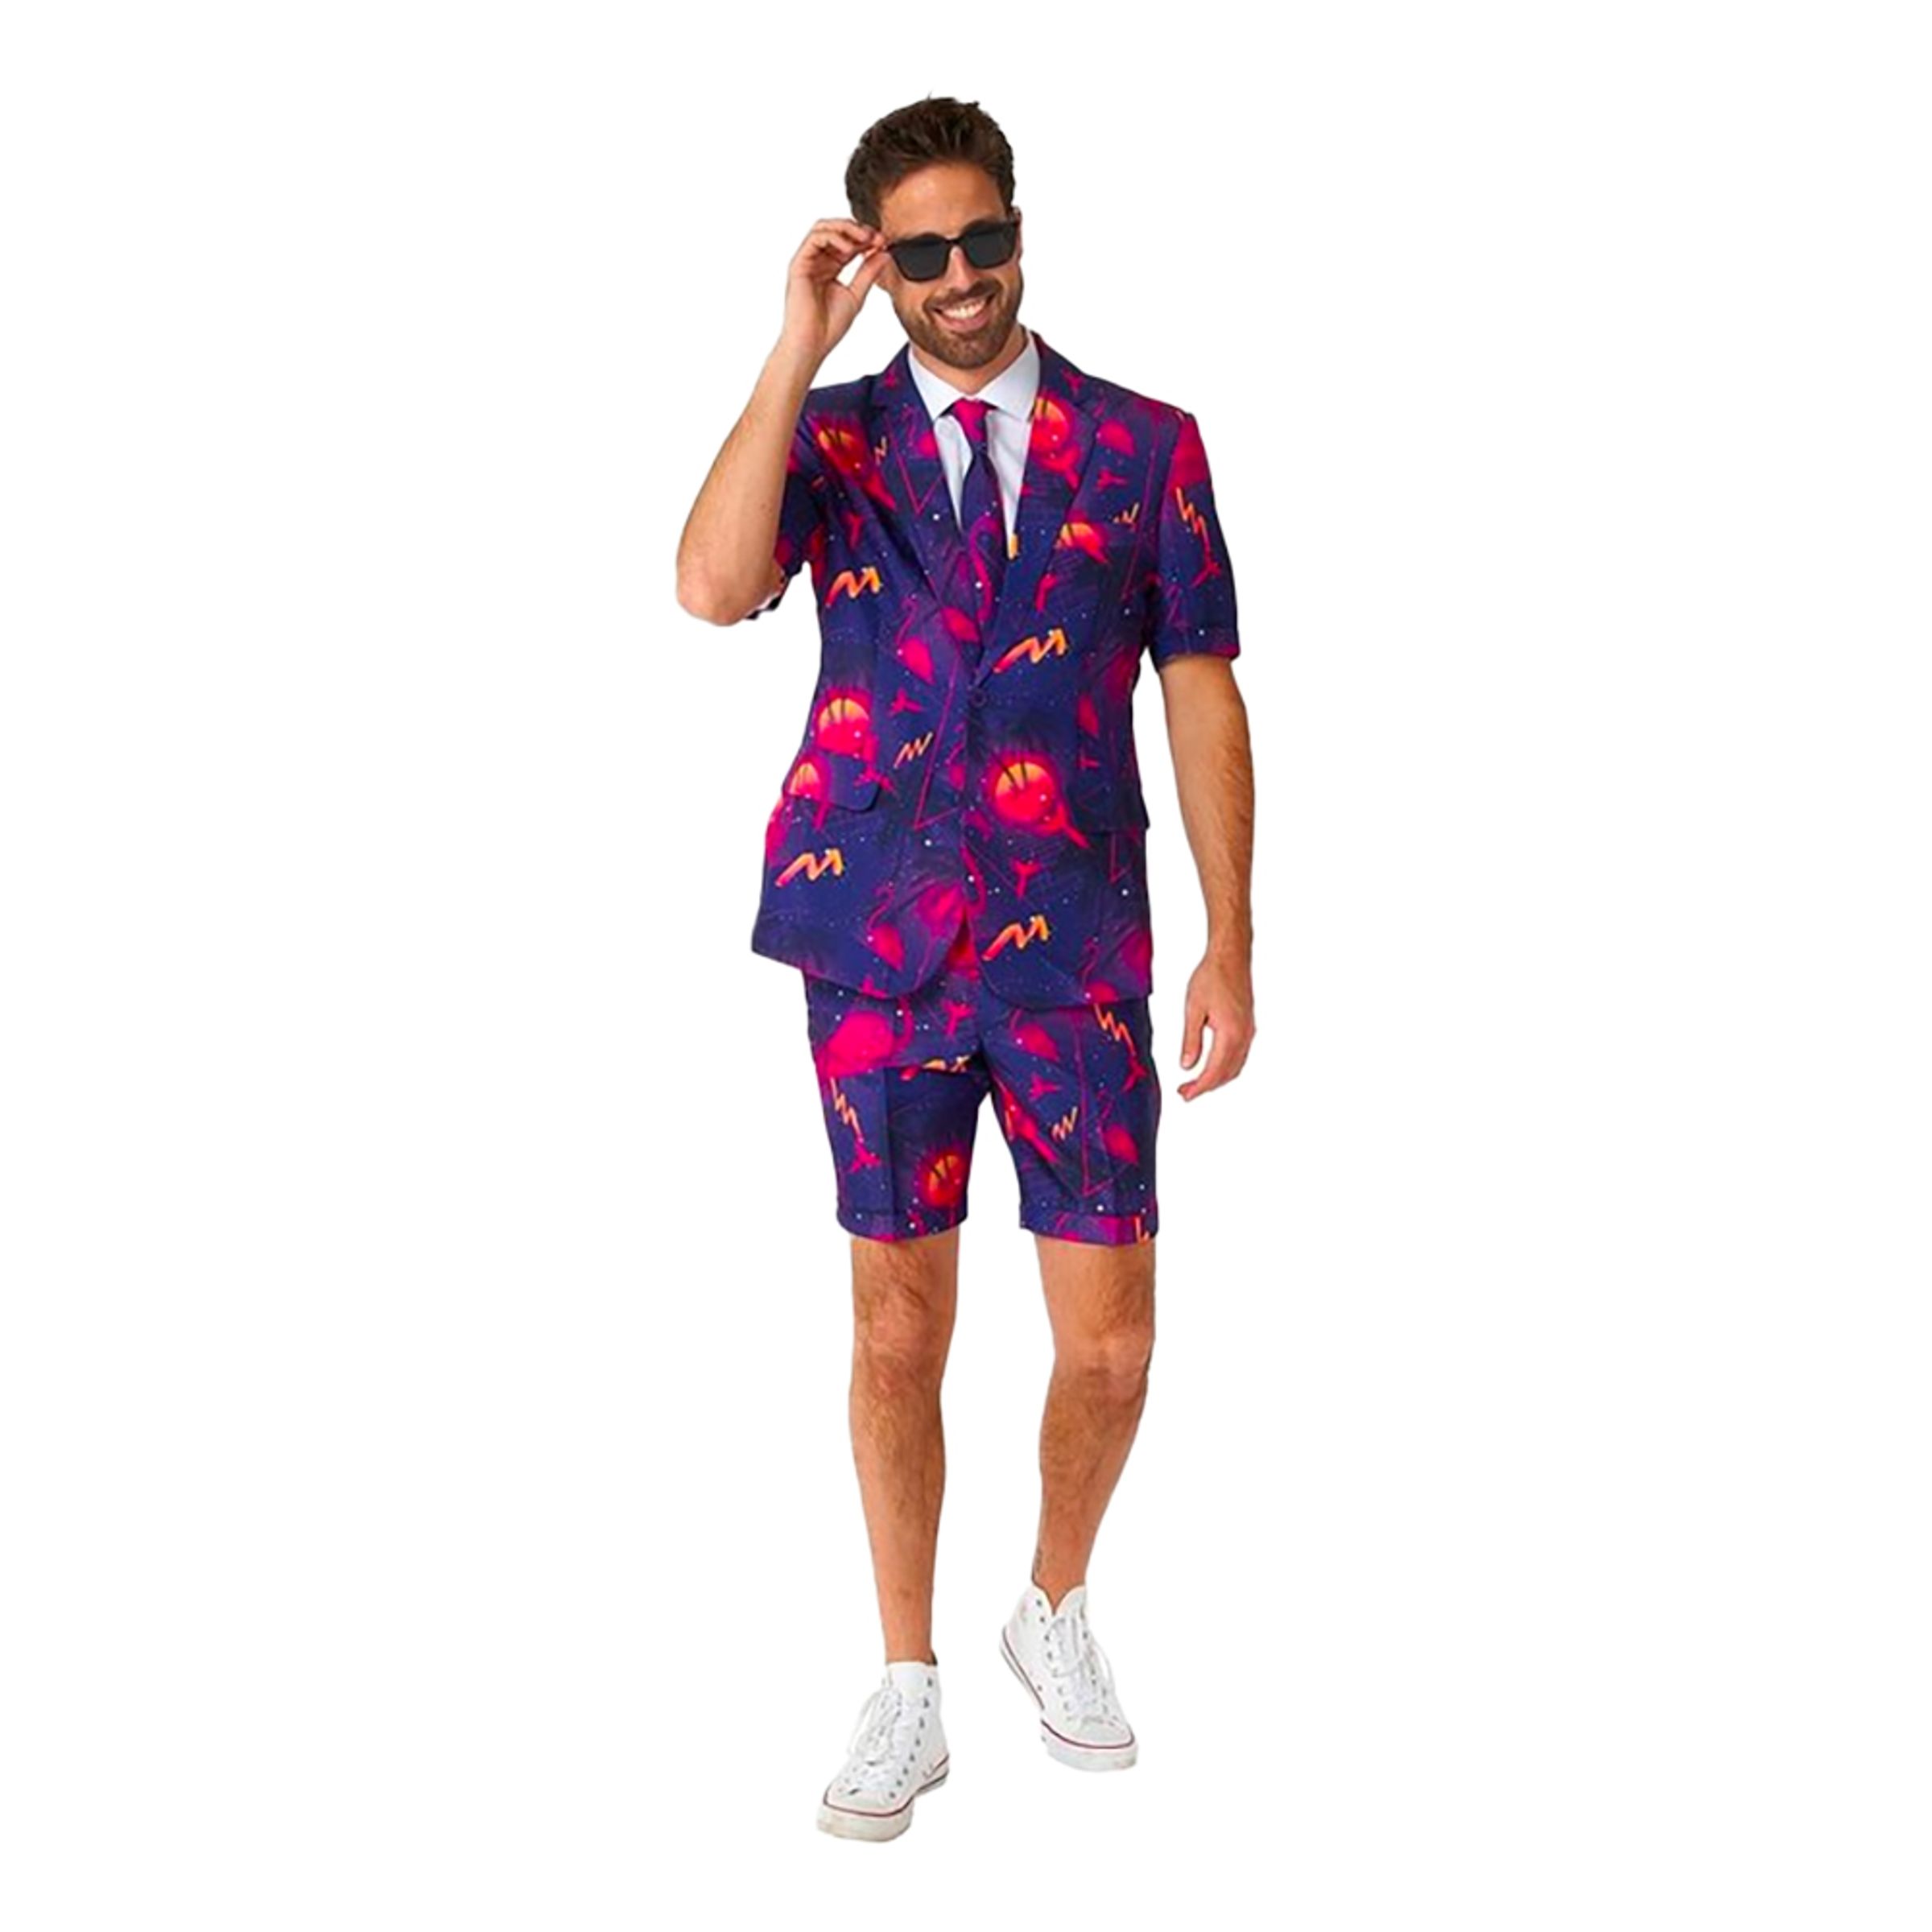 Suitmeister Retro Neon Navy Shorts Kostym - Medium